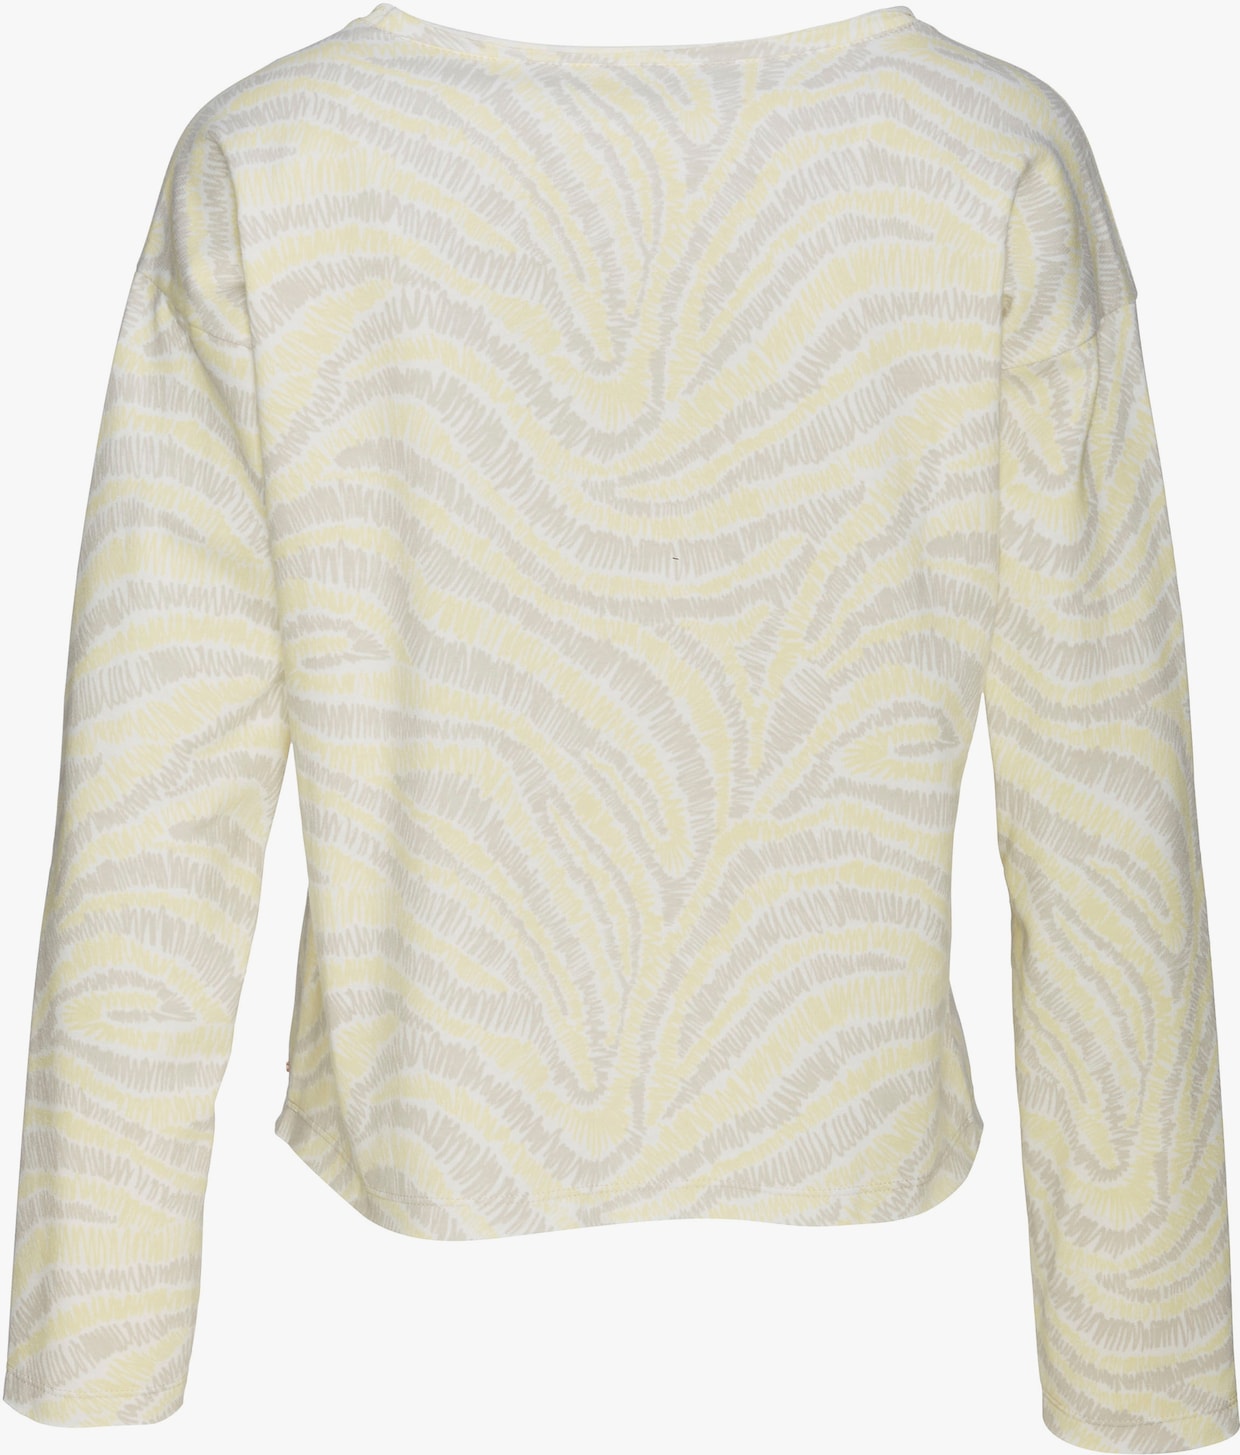 LASCANA Sweat-shirt - jaune clair-gris clair à motifs